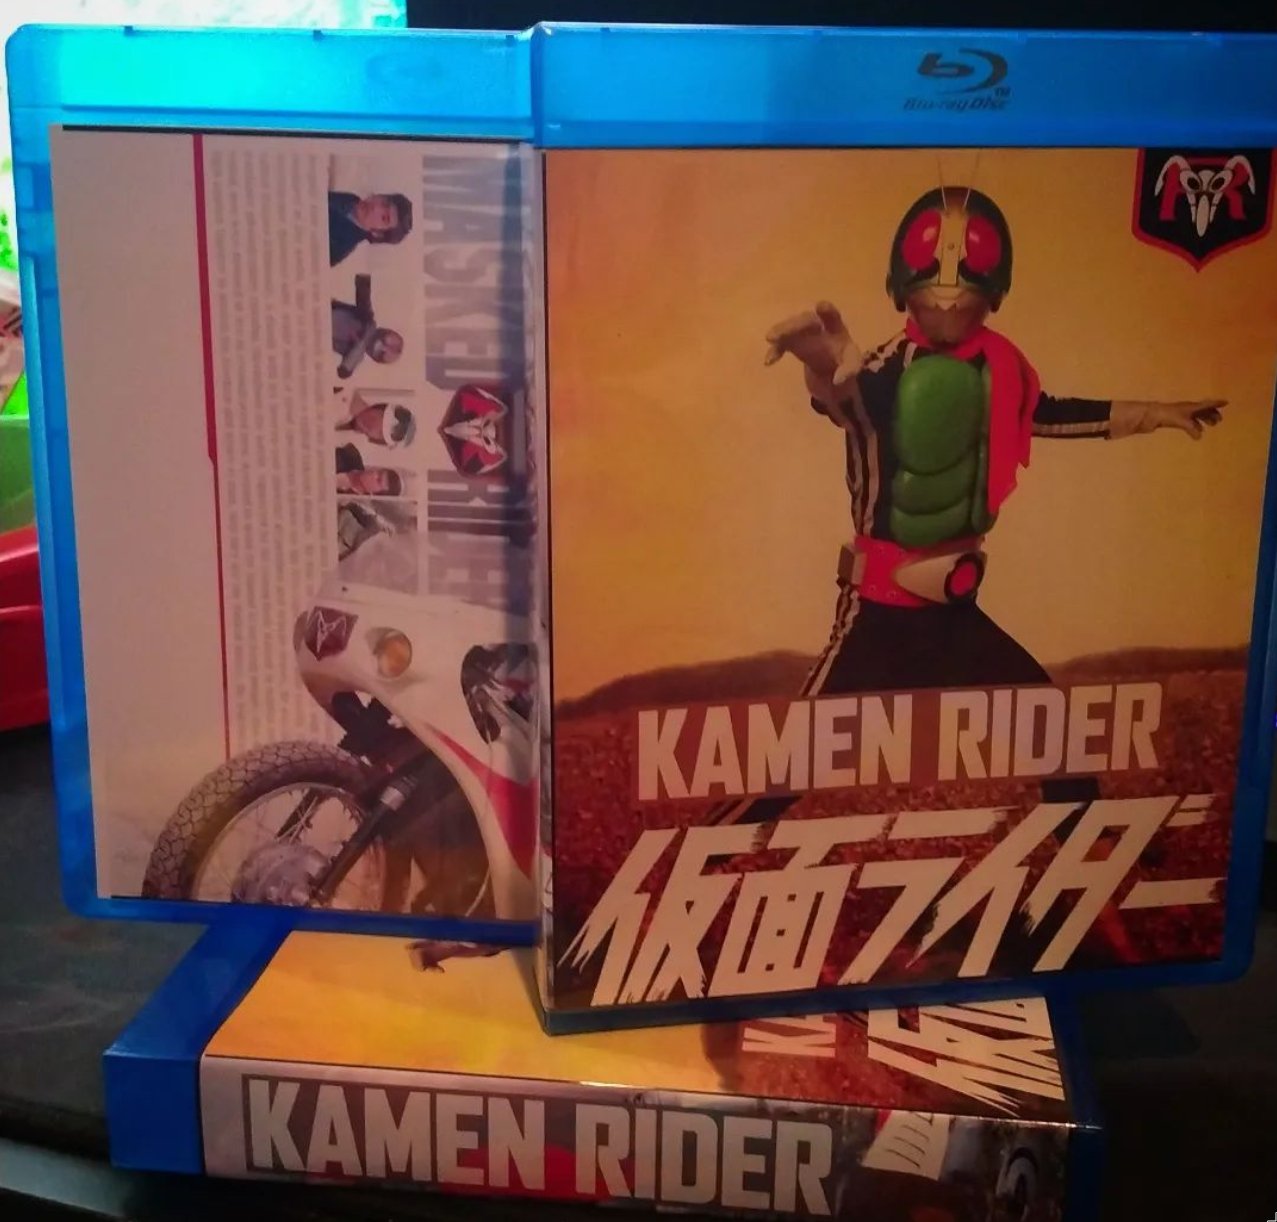 Kamen Rider Original Series 6 Bluray Set (1971-1973) 98 Episodes 1080p Region Free English Subtitles